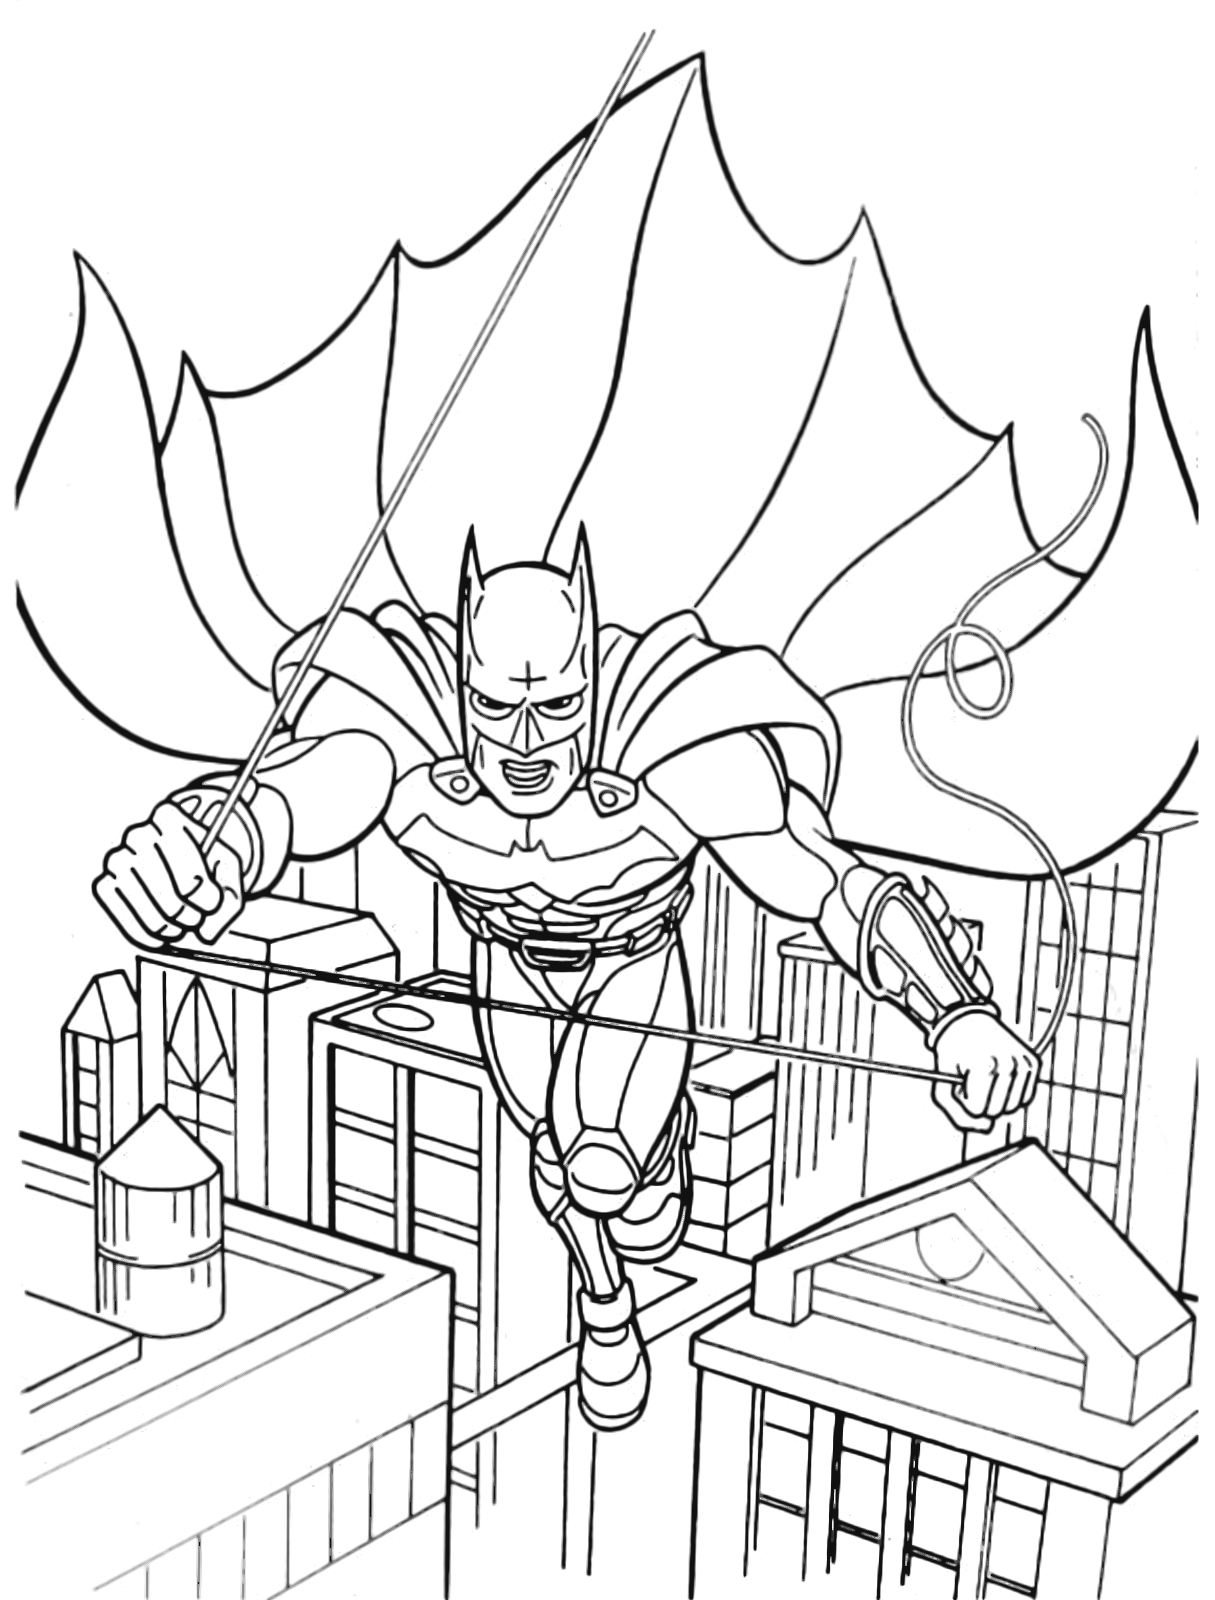 Batman - Batman vola fra gli edifici di Gotham City